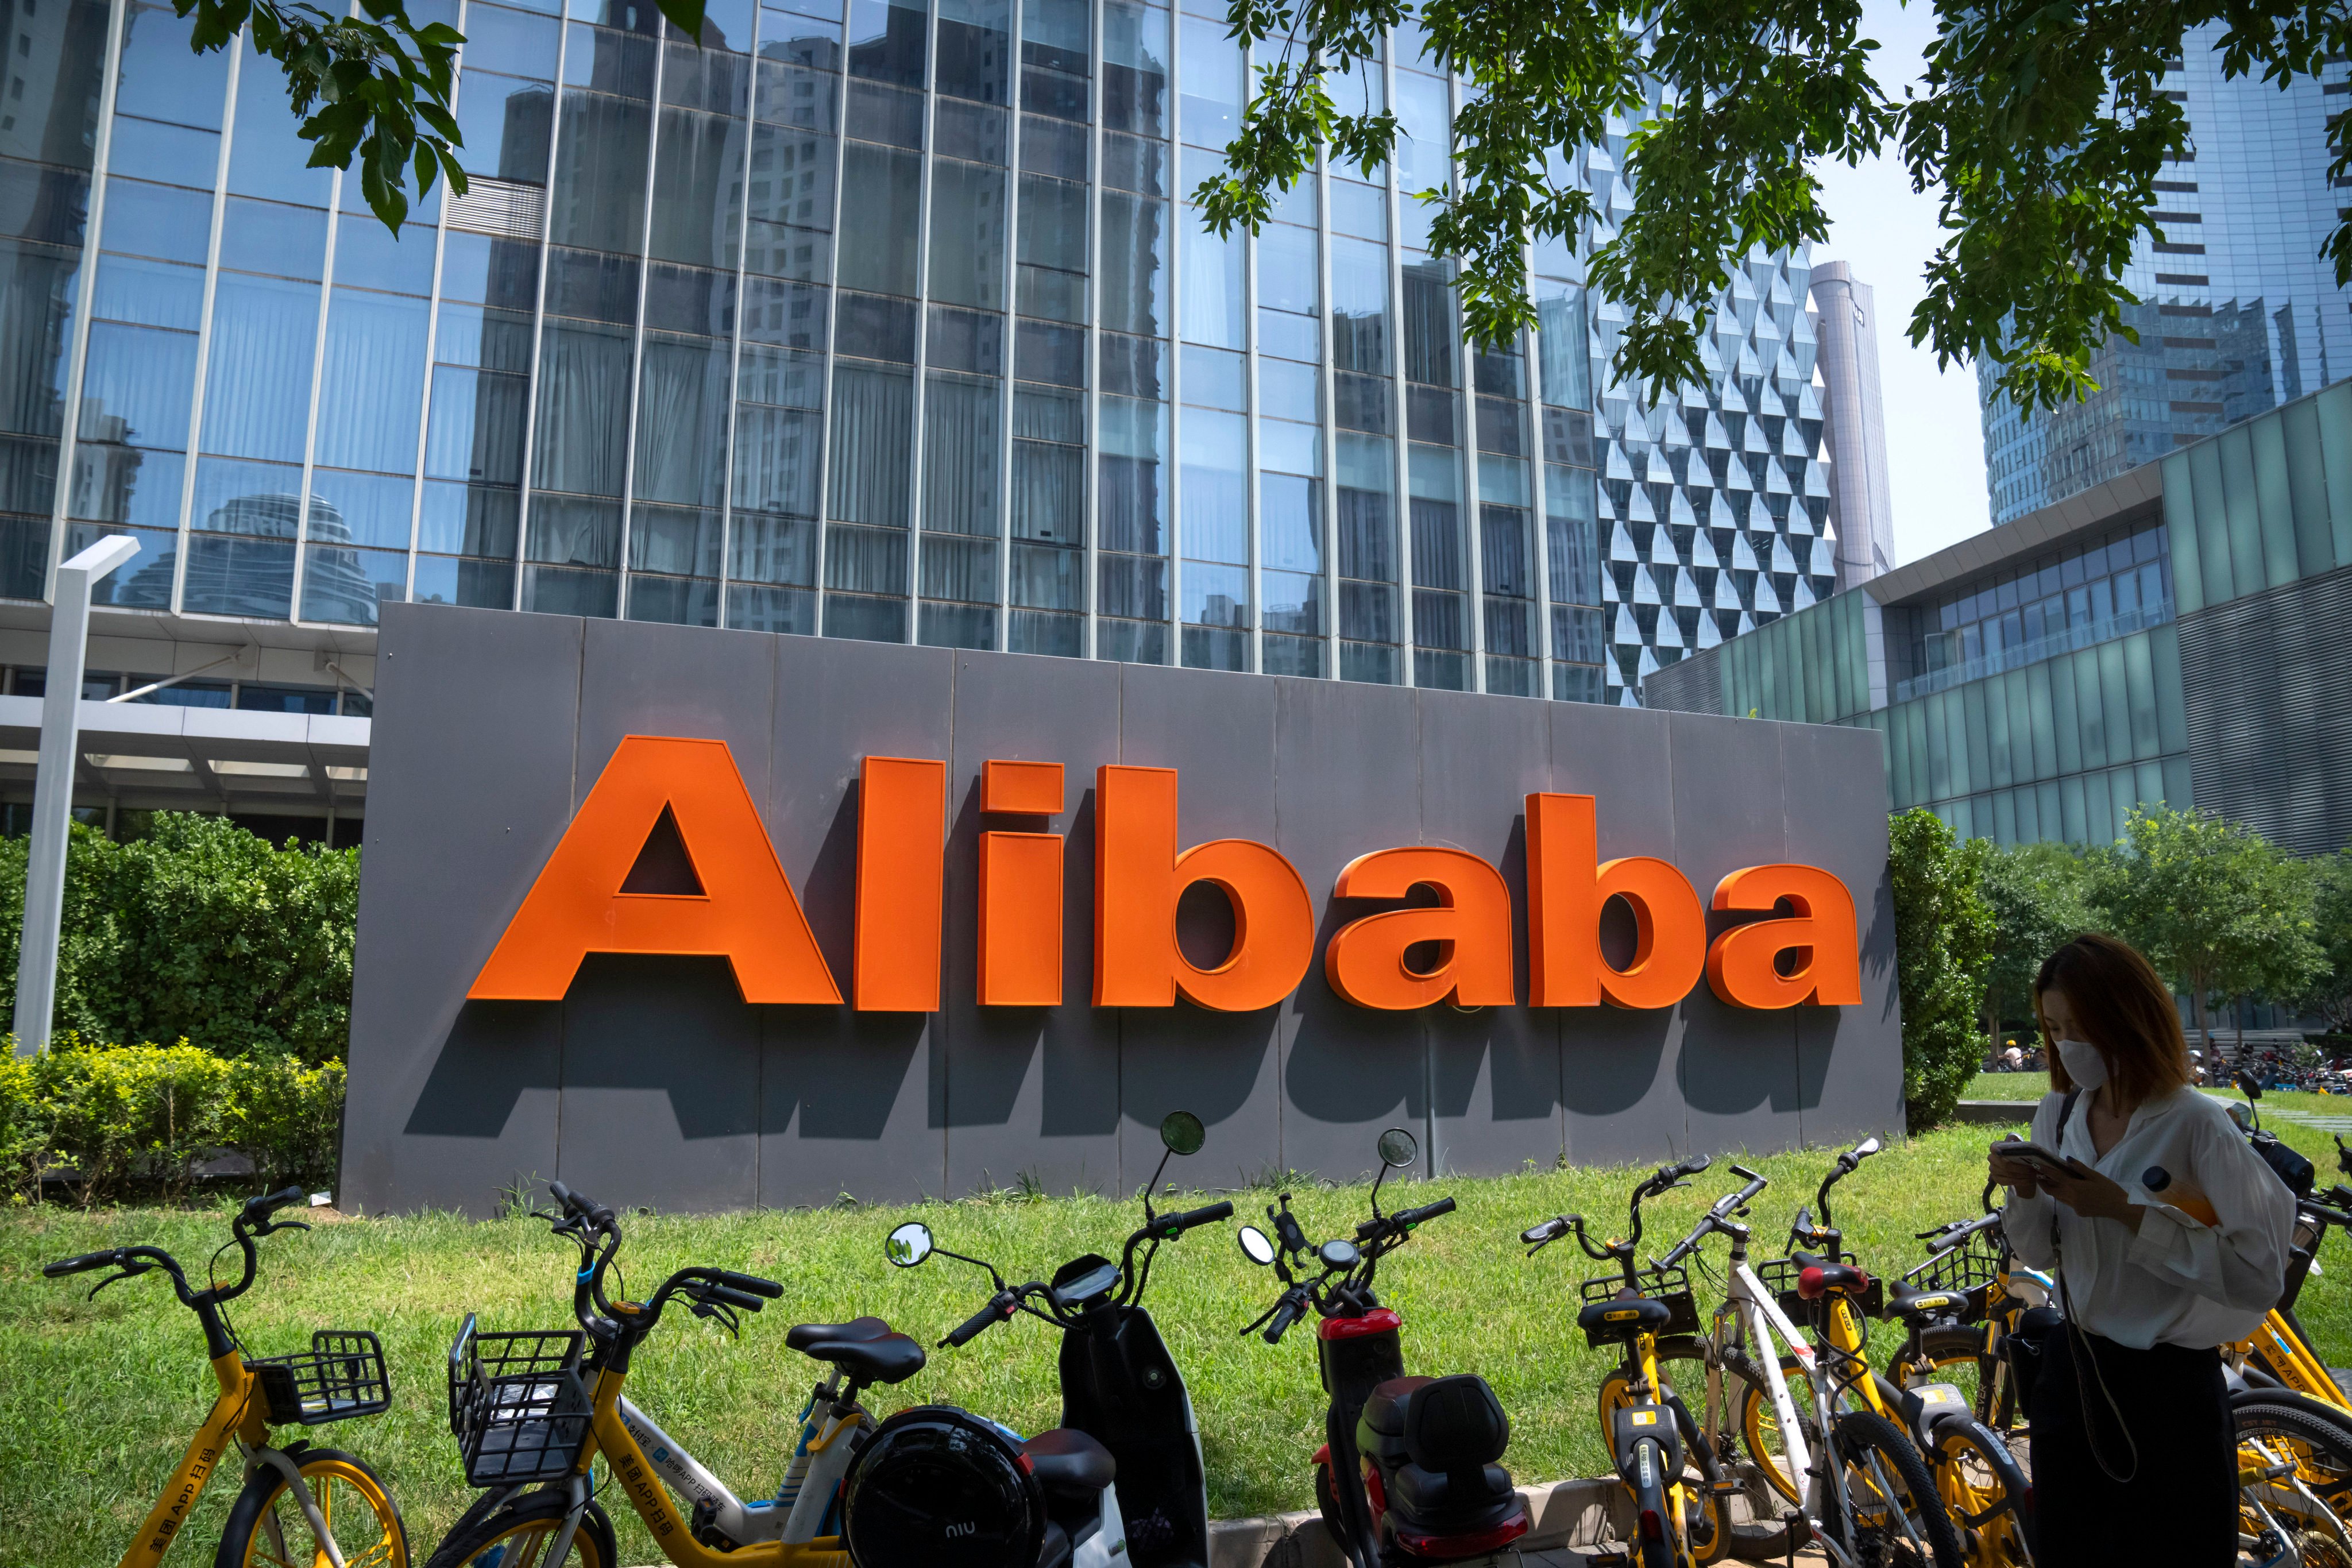 Alibaba’s office in Beijing. Photo: AP Photo